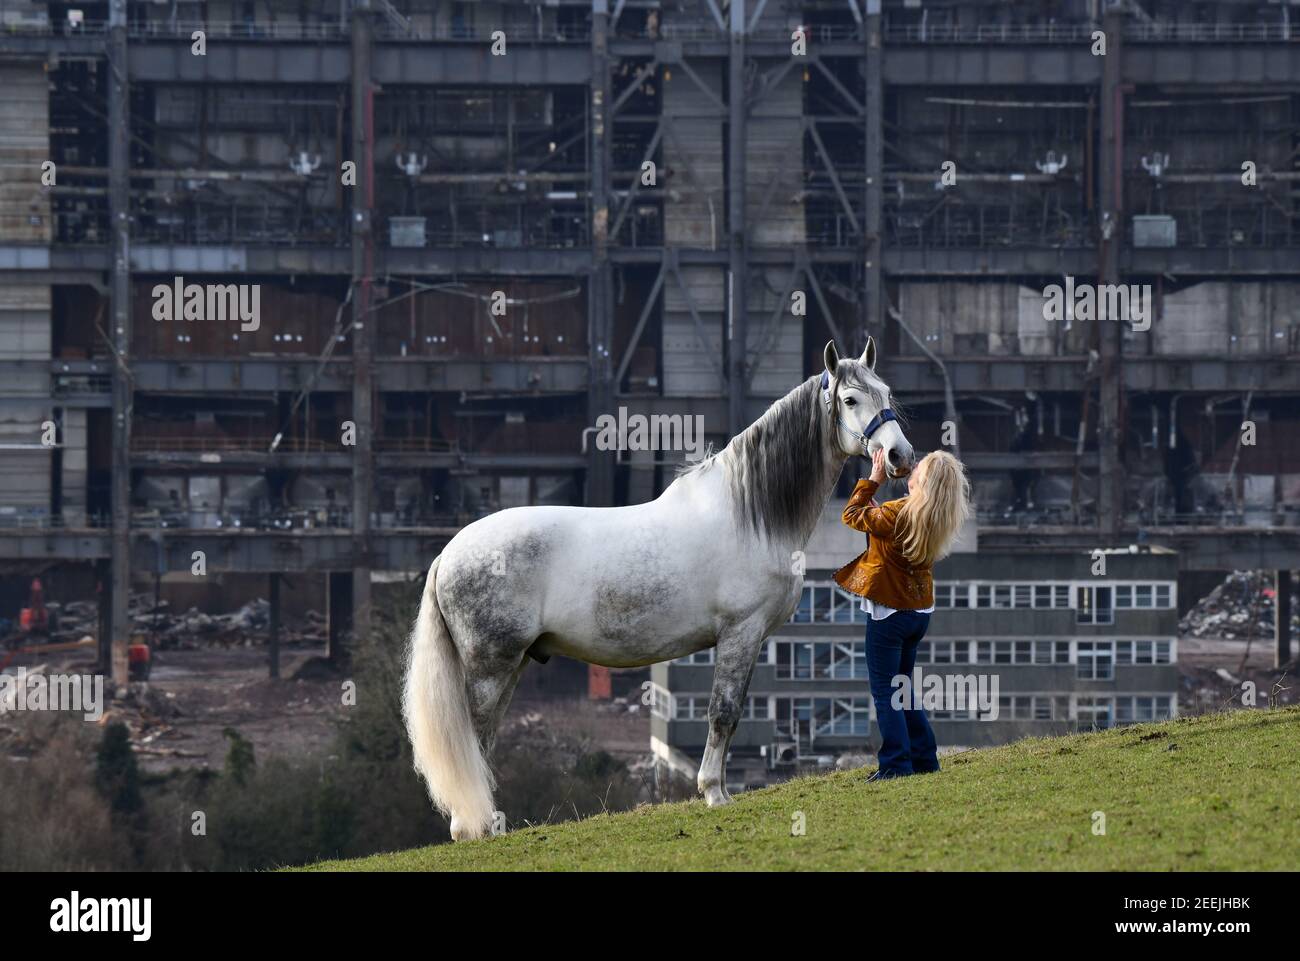 Team russia petlove horse